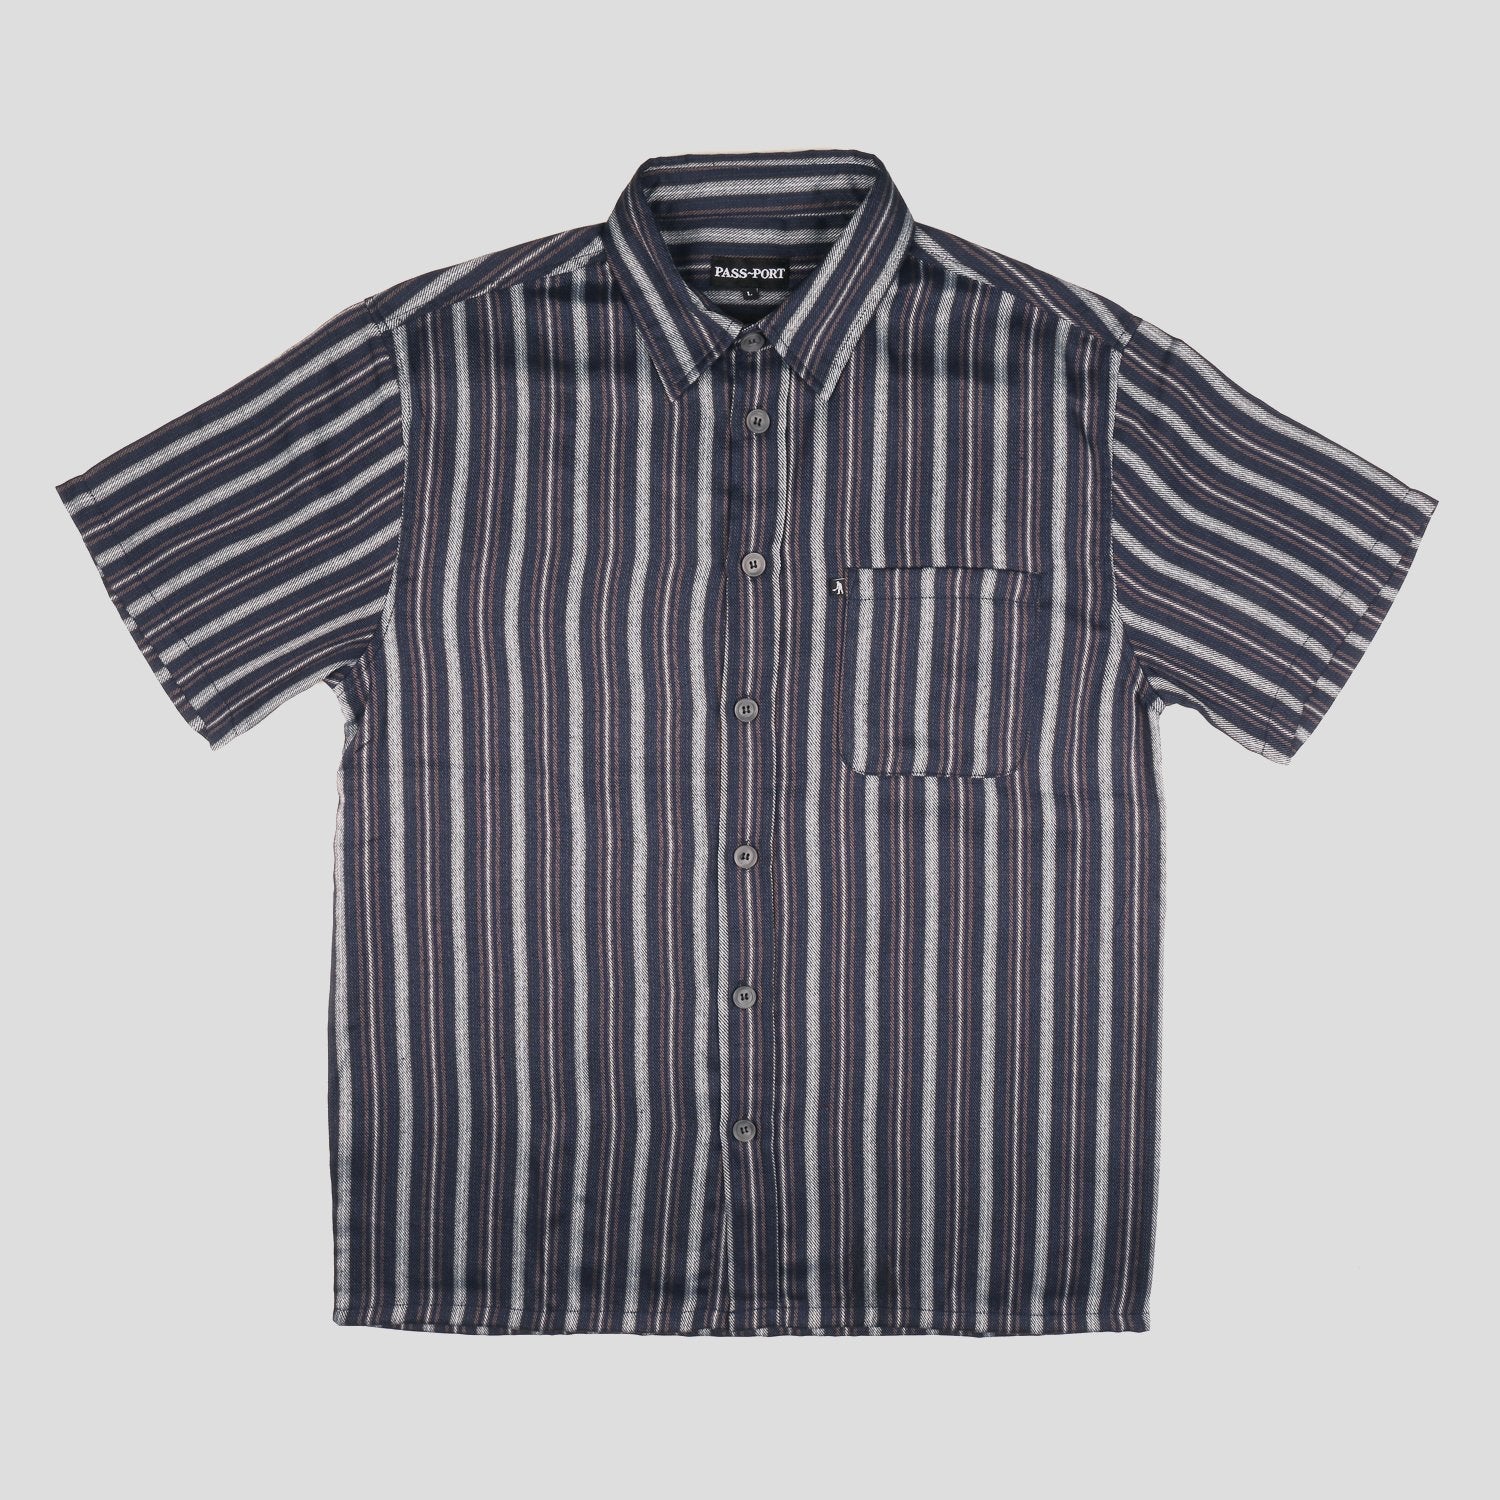 Workers Stripe Shirts - Shortsleeve (Navy)